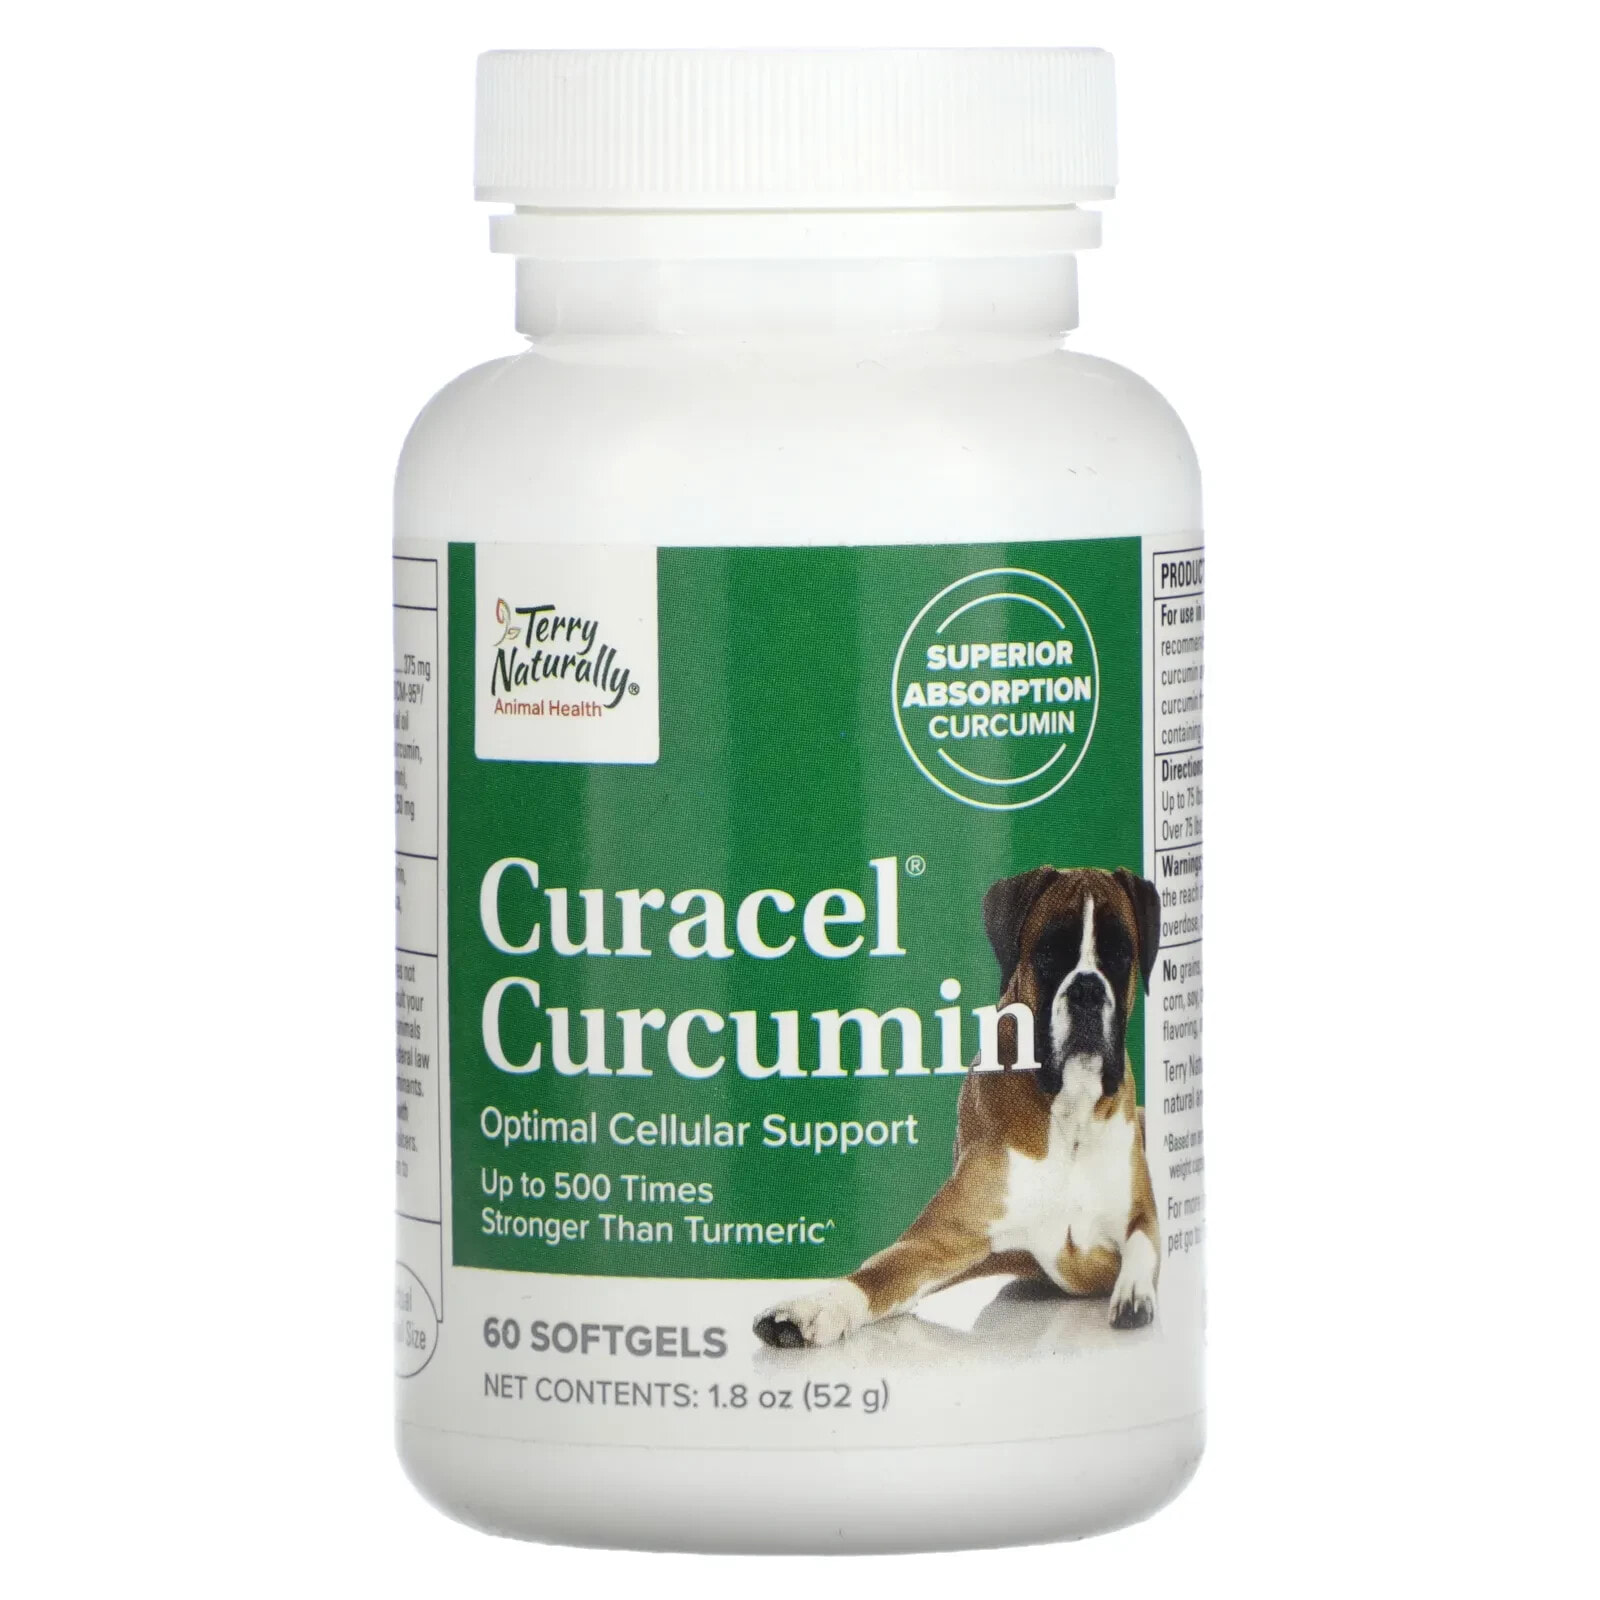 Terry Naturally, Curacel Curcumin, для собак, 60 мягких таблеток, 52 г (1,8 унции)